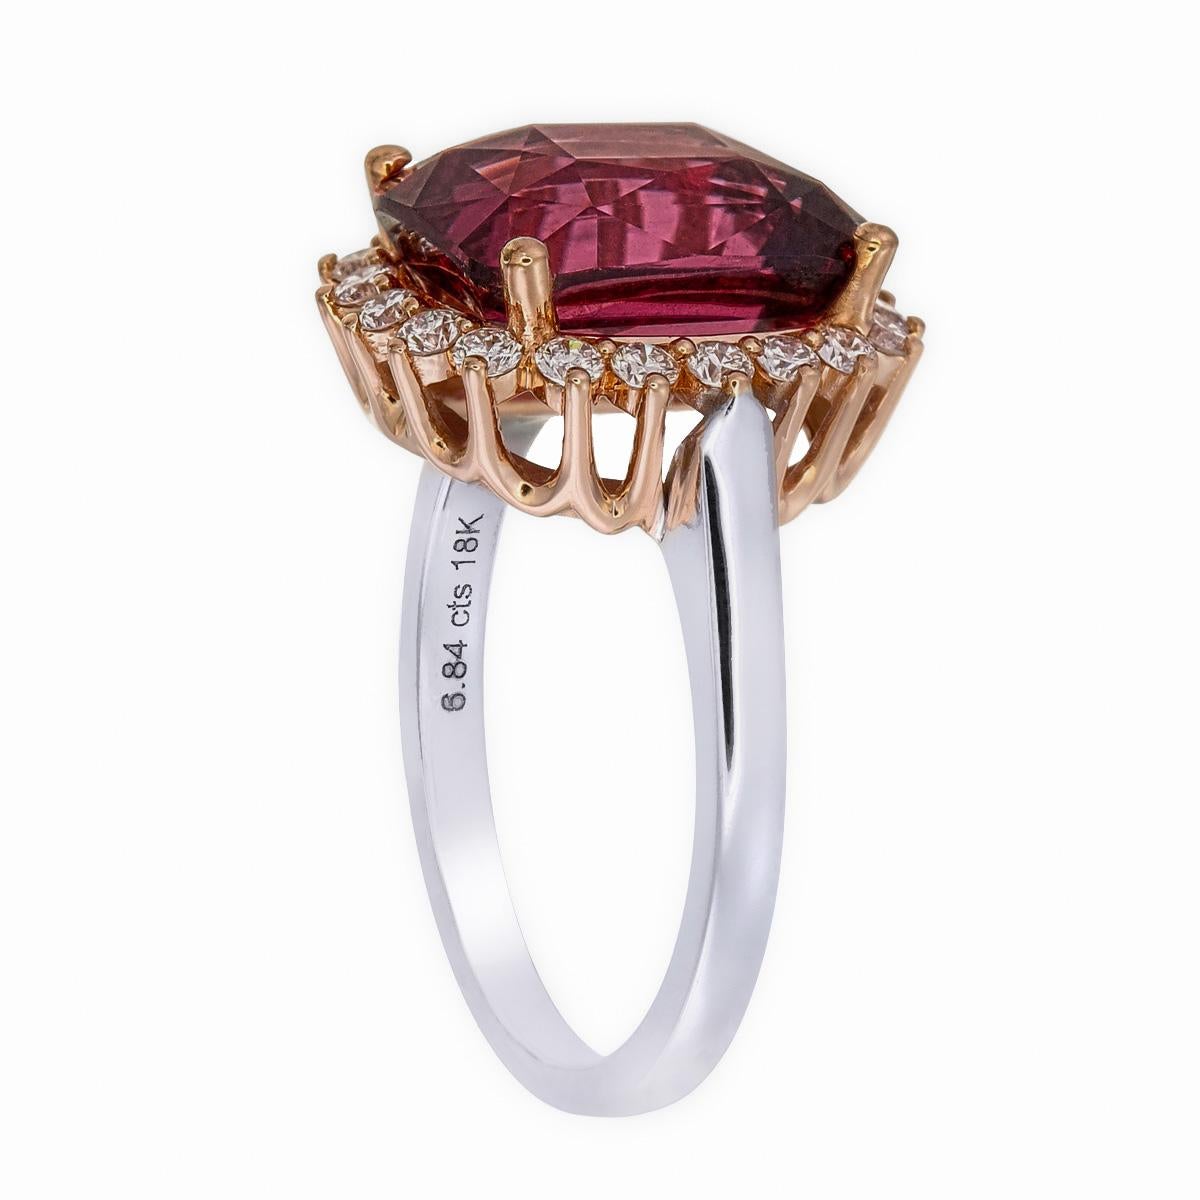 Cushion Cut Orloff of Denmark, 6.40 ct Pinkish Red Spinel Diamond Ring in 18 Karat Gold For Sale